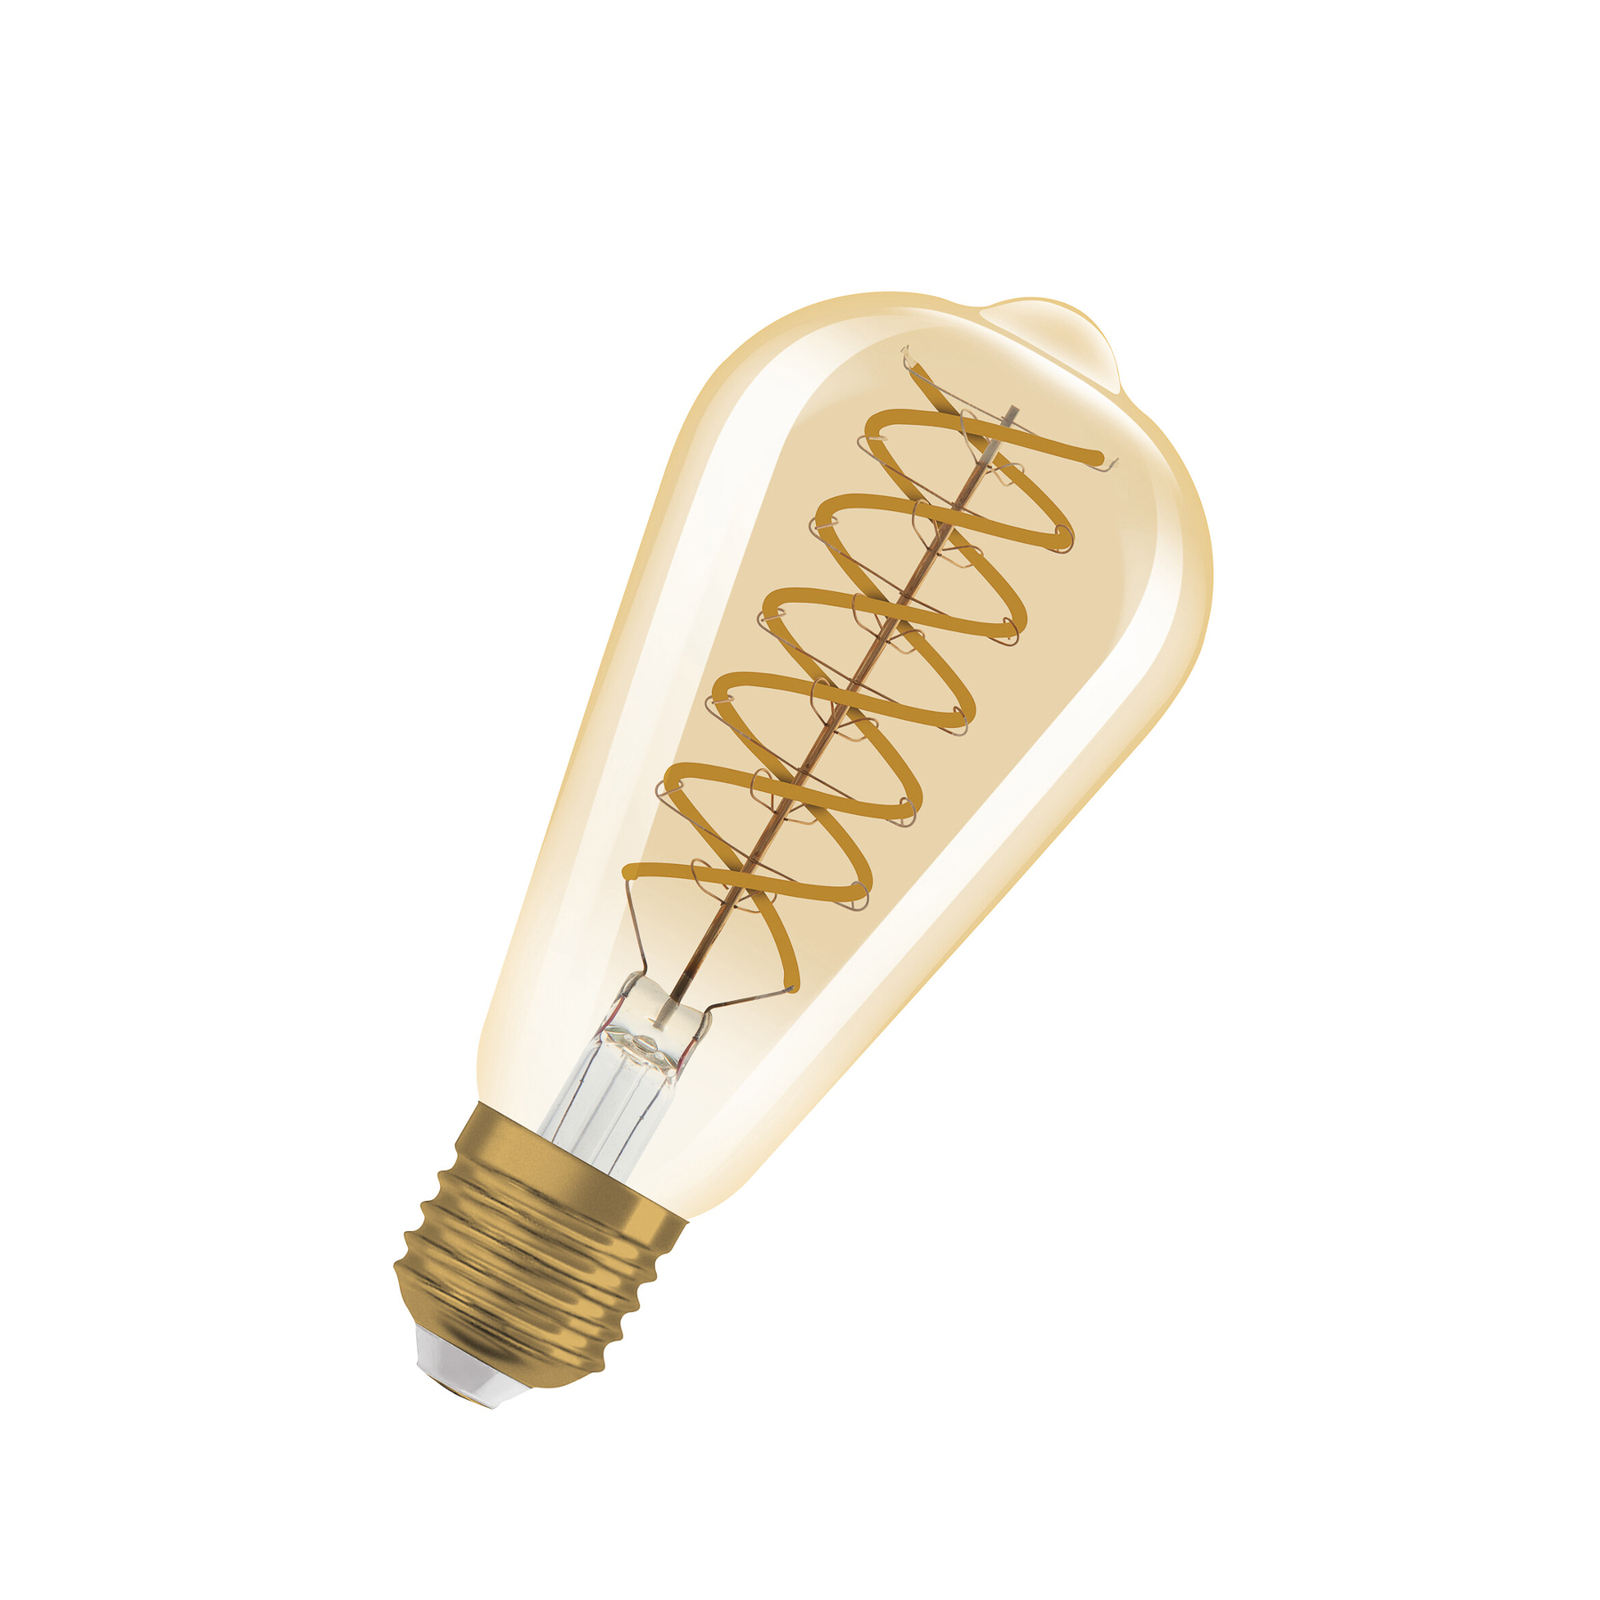 OSRAM LED Vintage 1906 Edison, goud, E27, 8,8 W, 824, dimbaar.